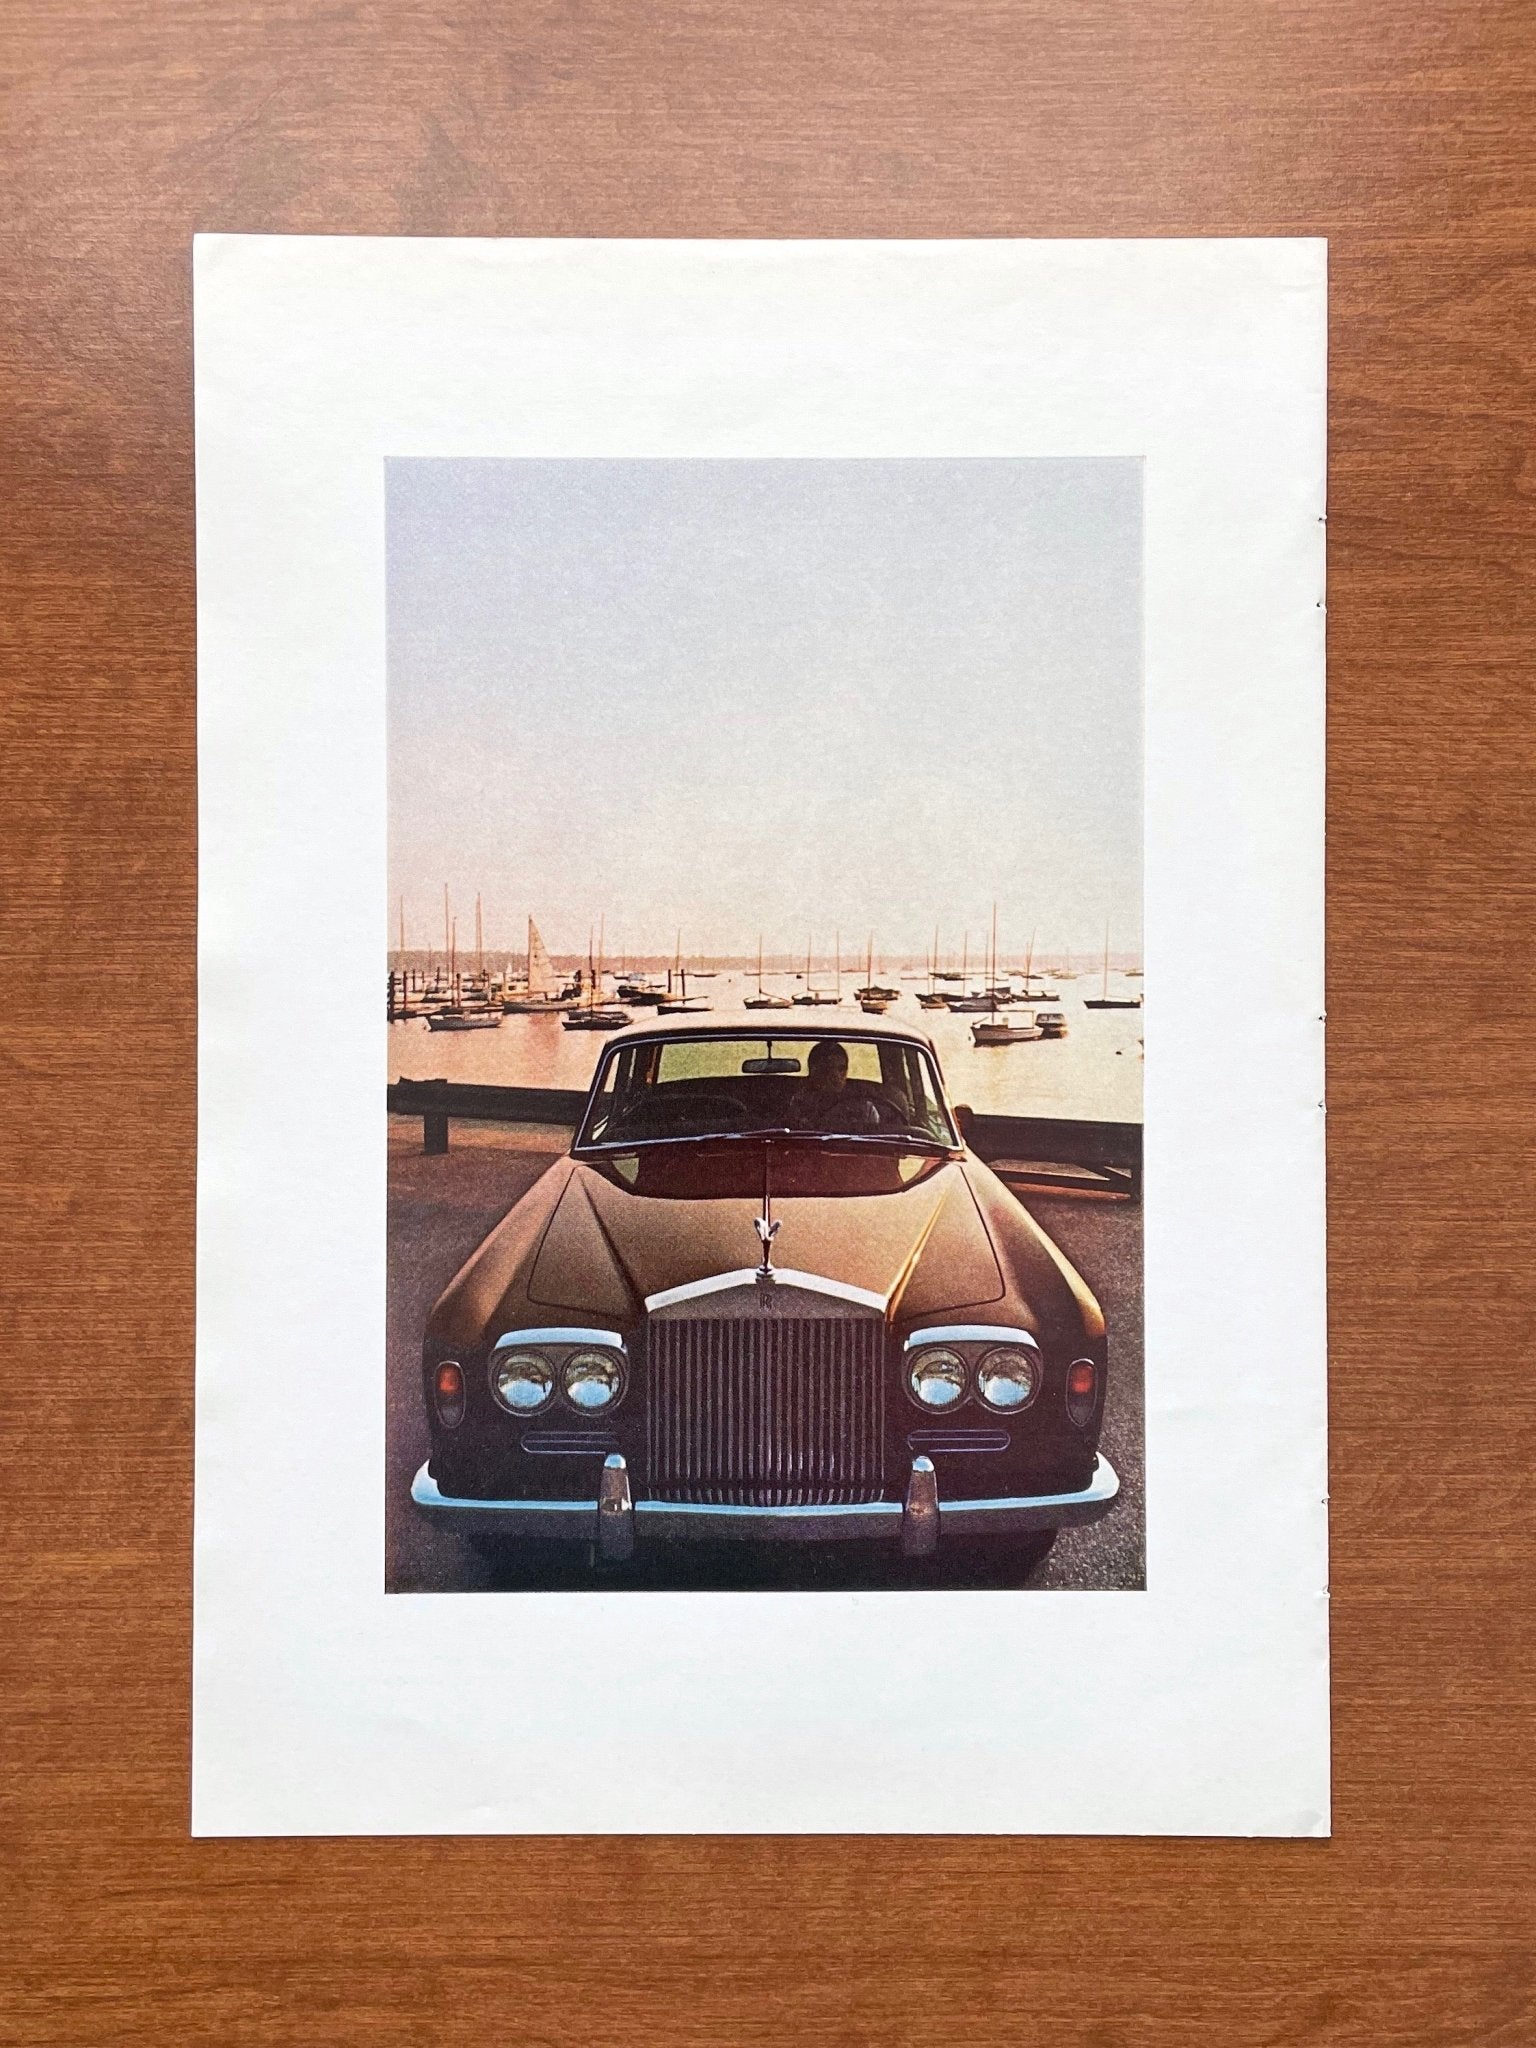 1970 Rolls Royce Silver Shadow image Advertisement